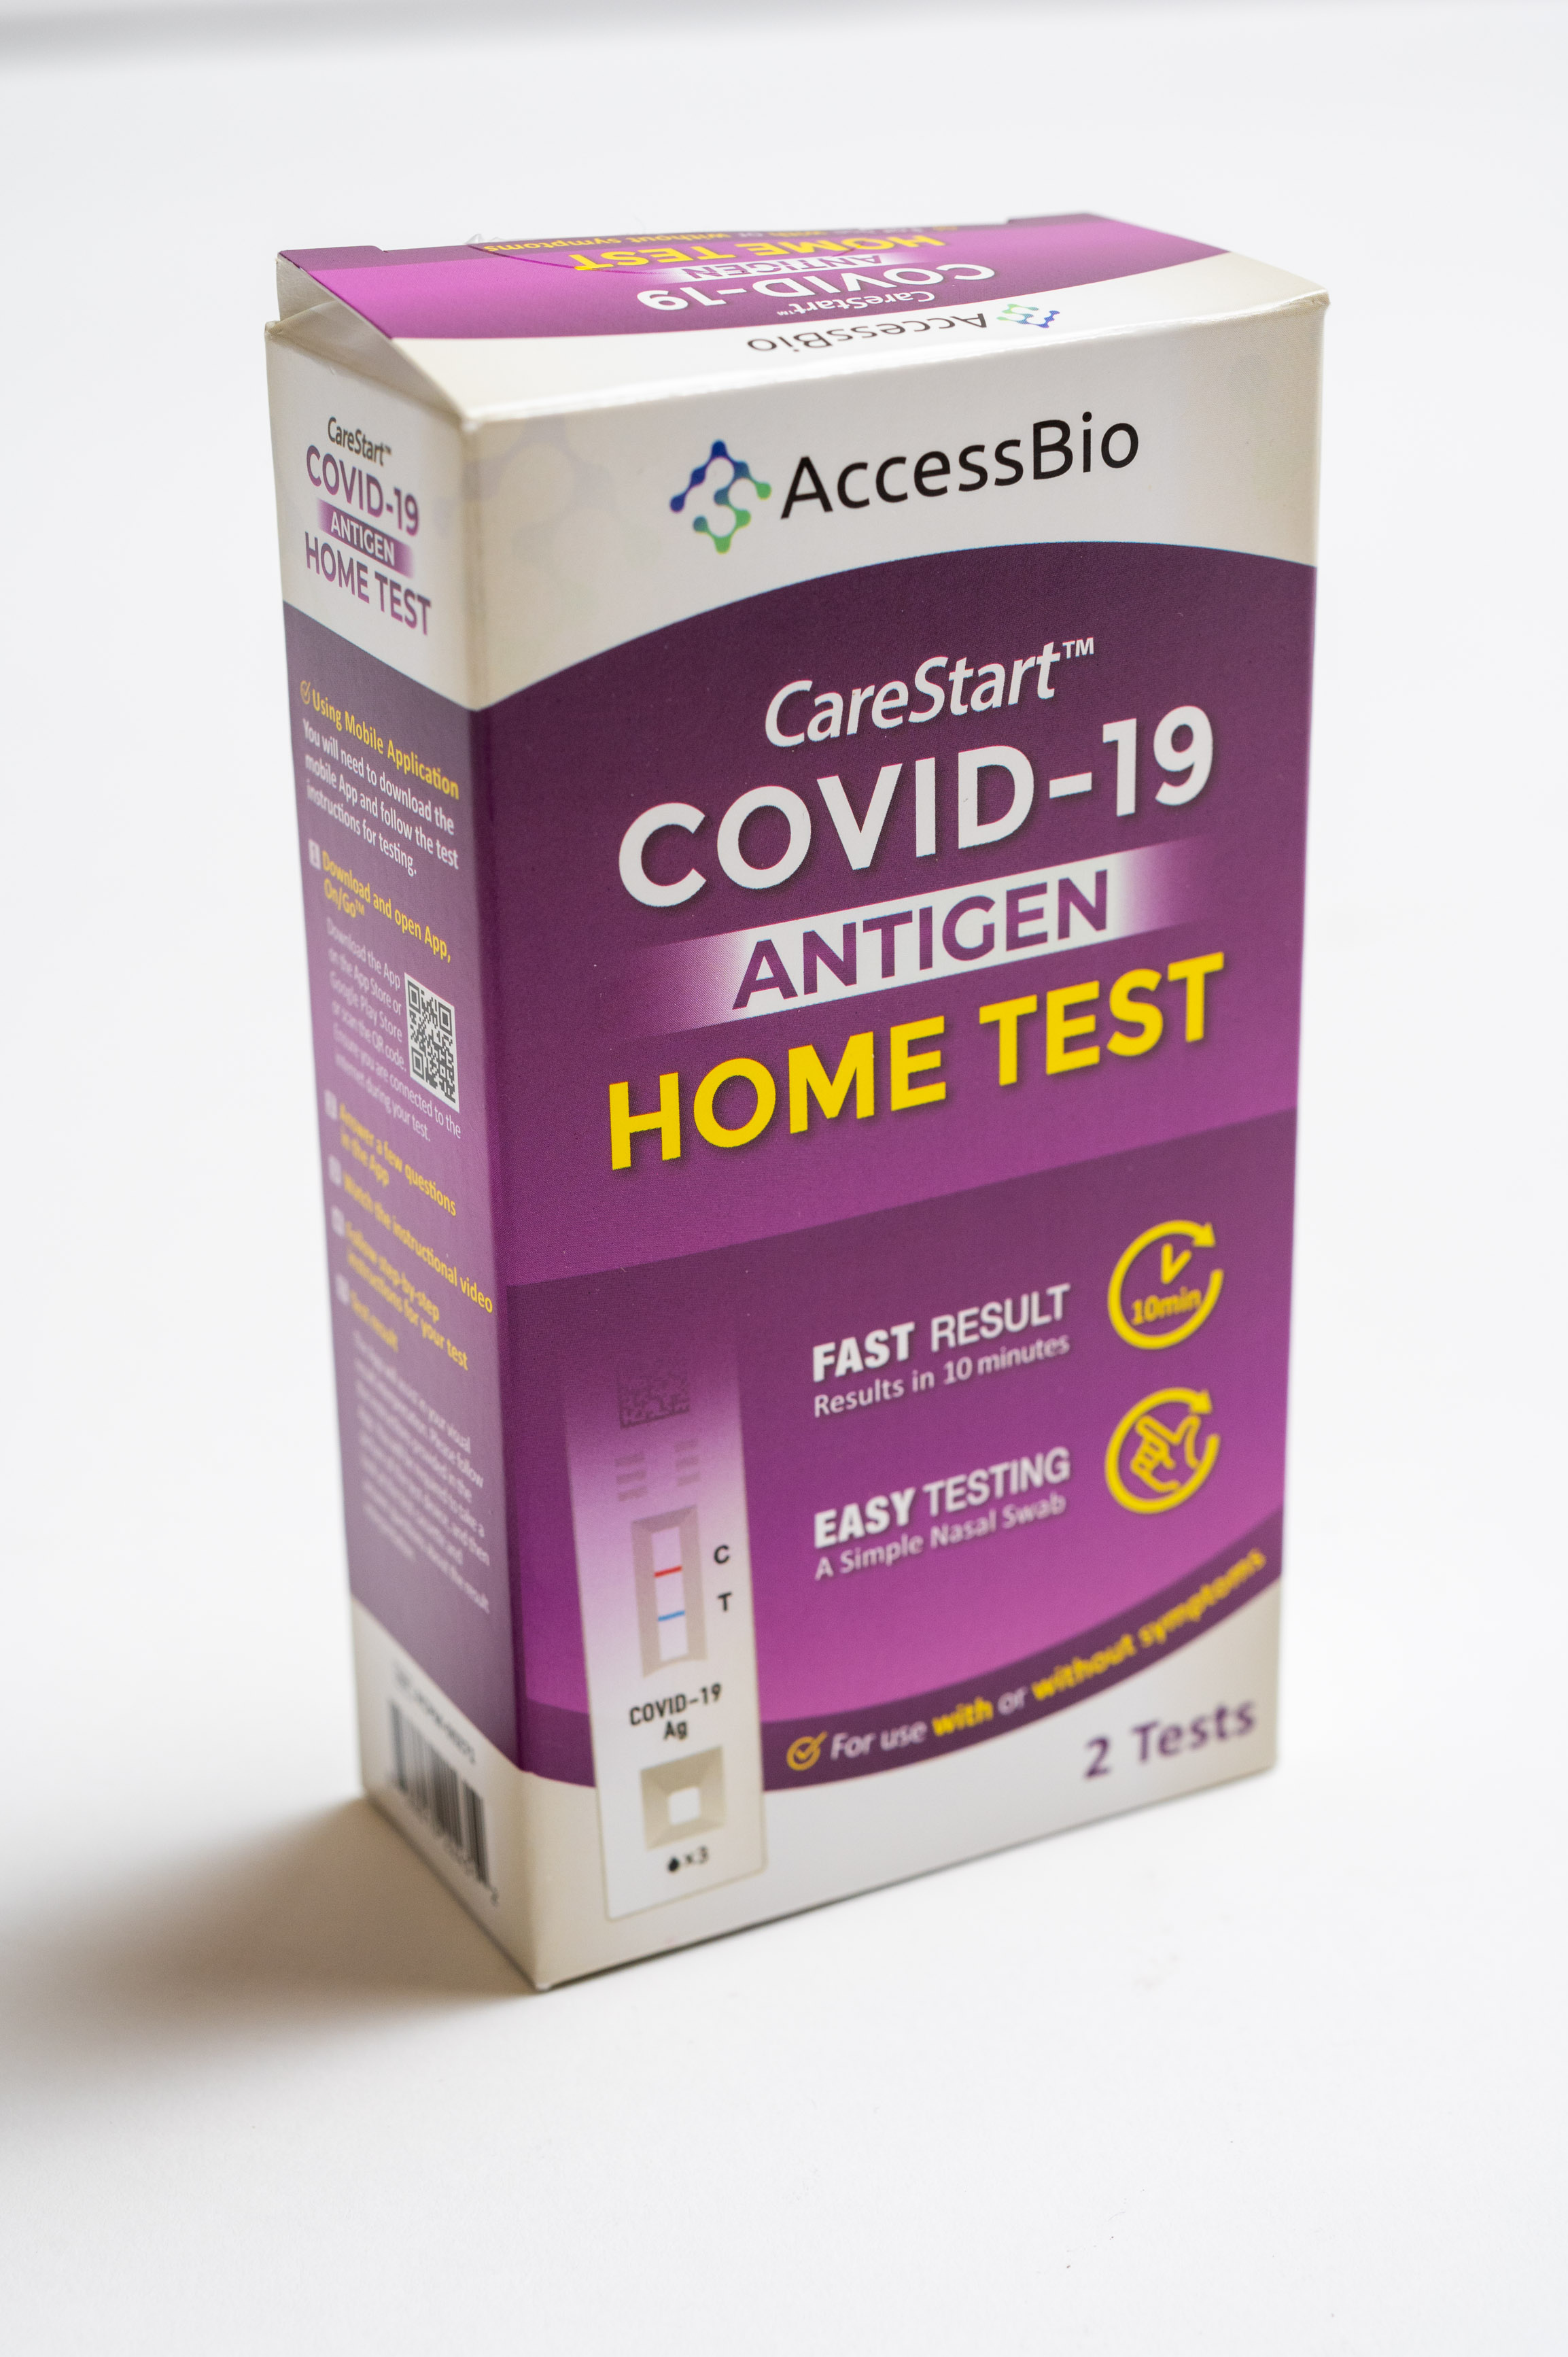 image of COVID-19 test kit